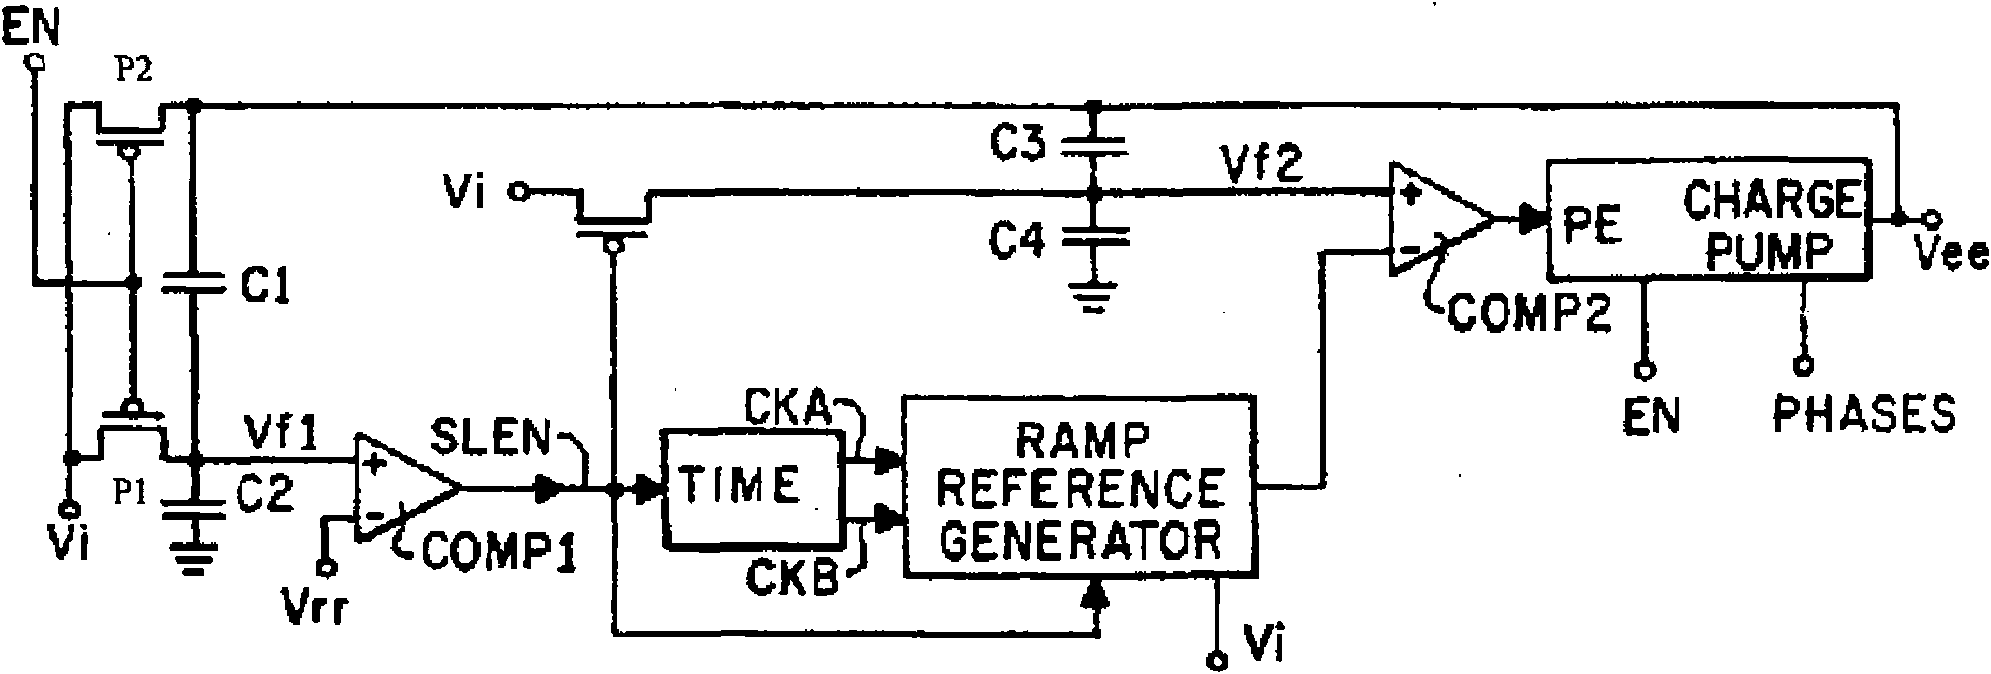 Negative voltage slope control circuit